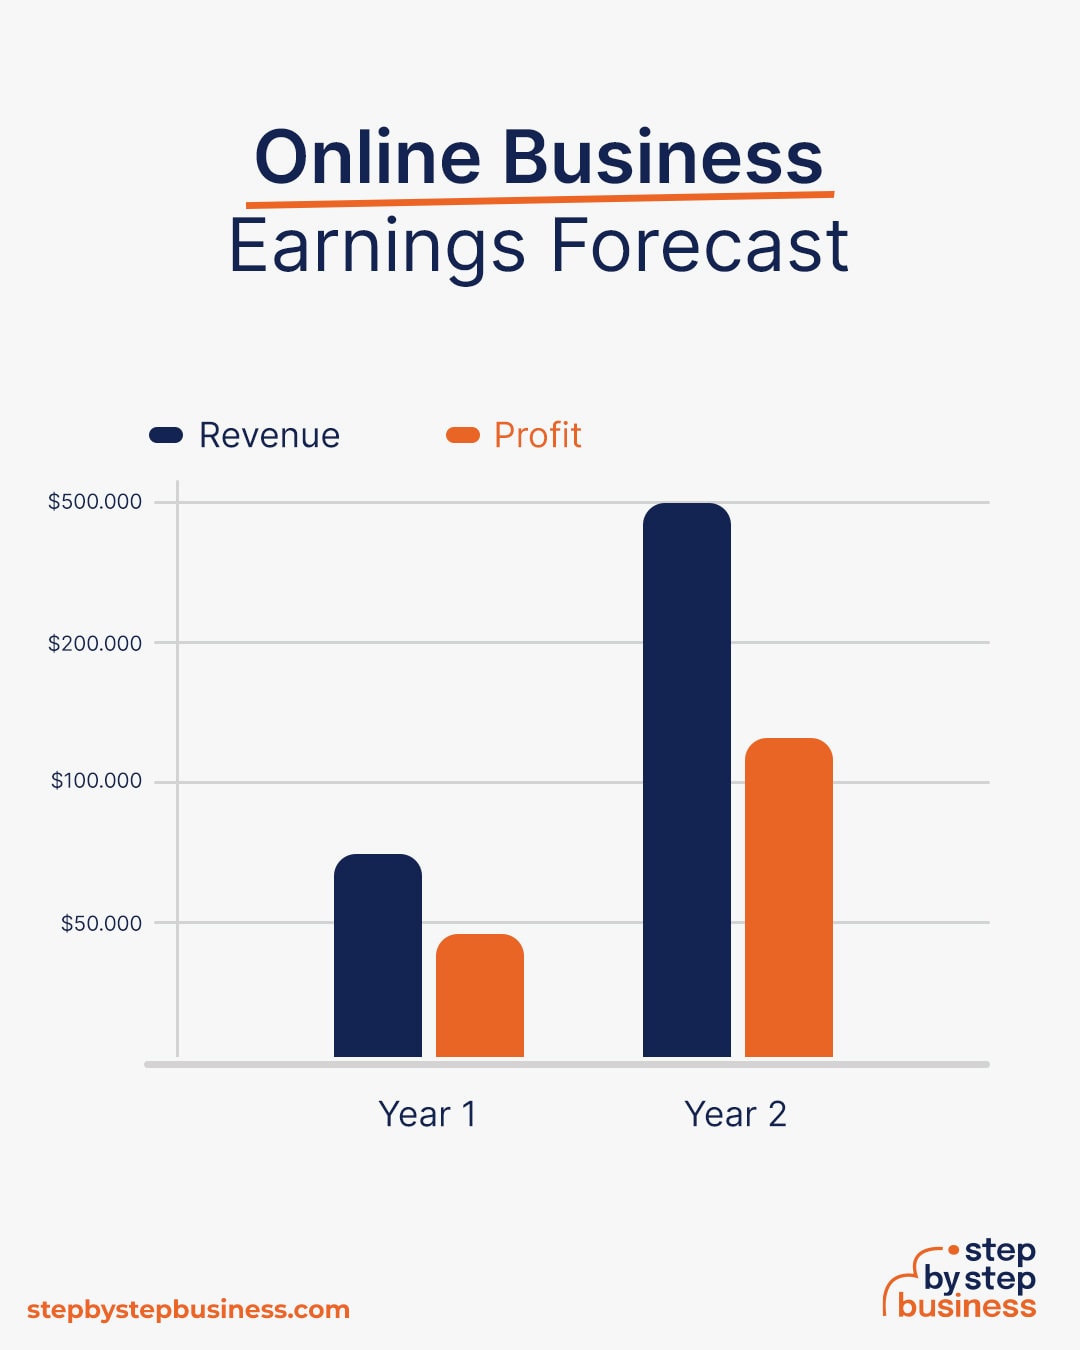 Online Business earning forecast